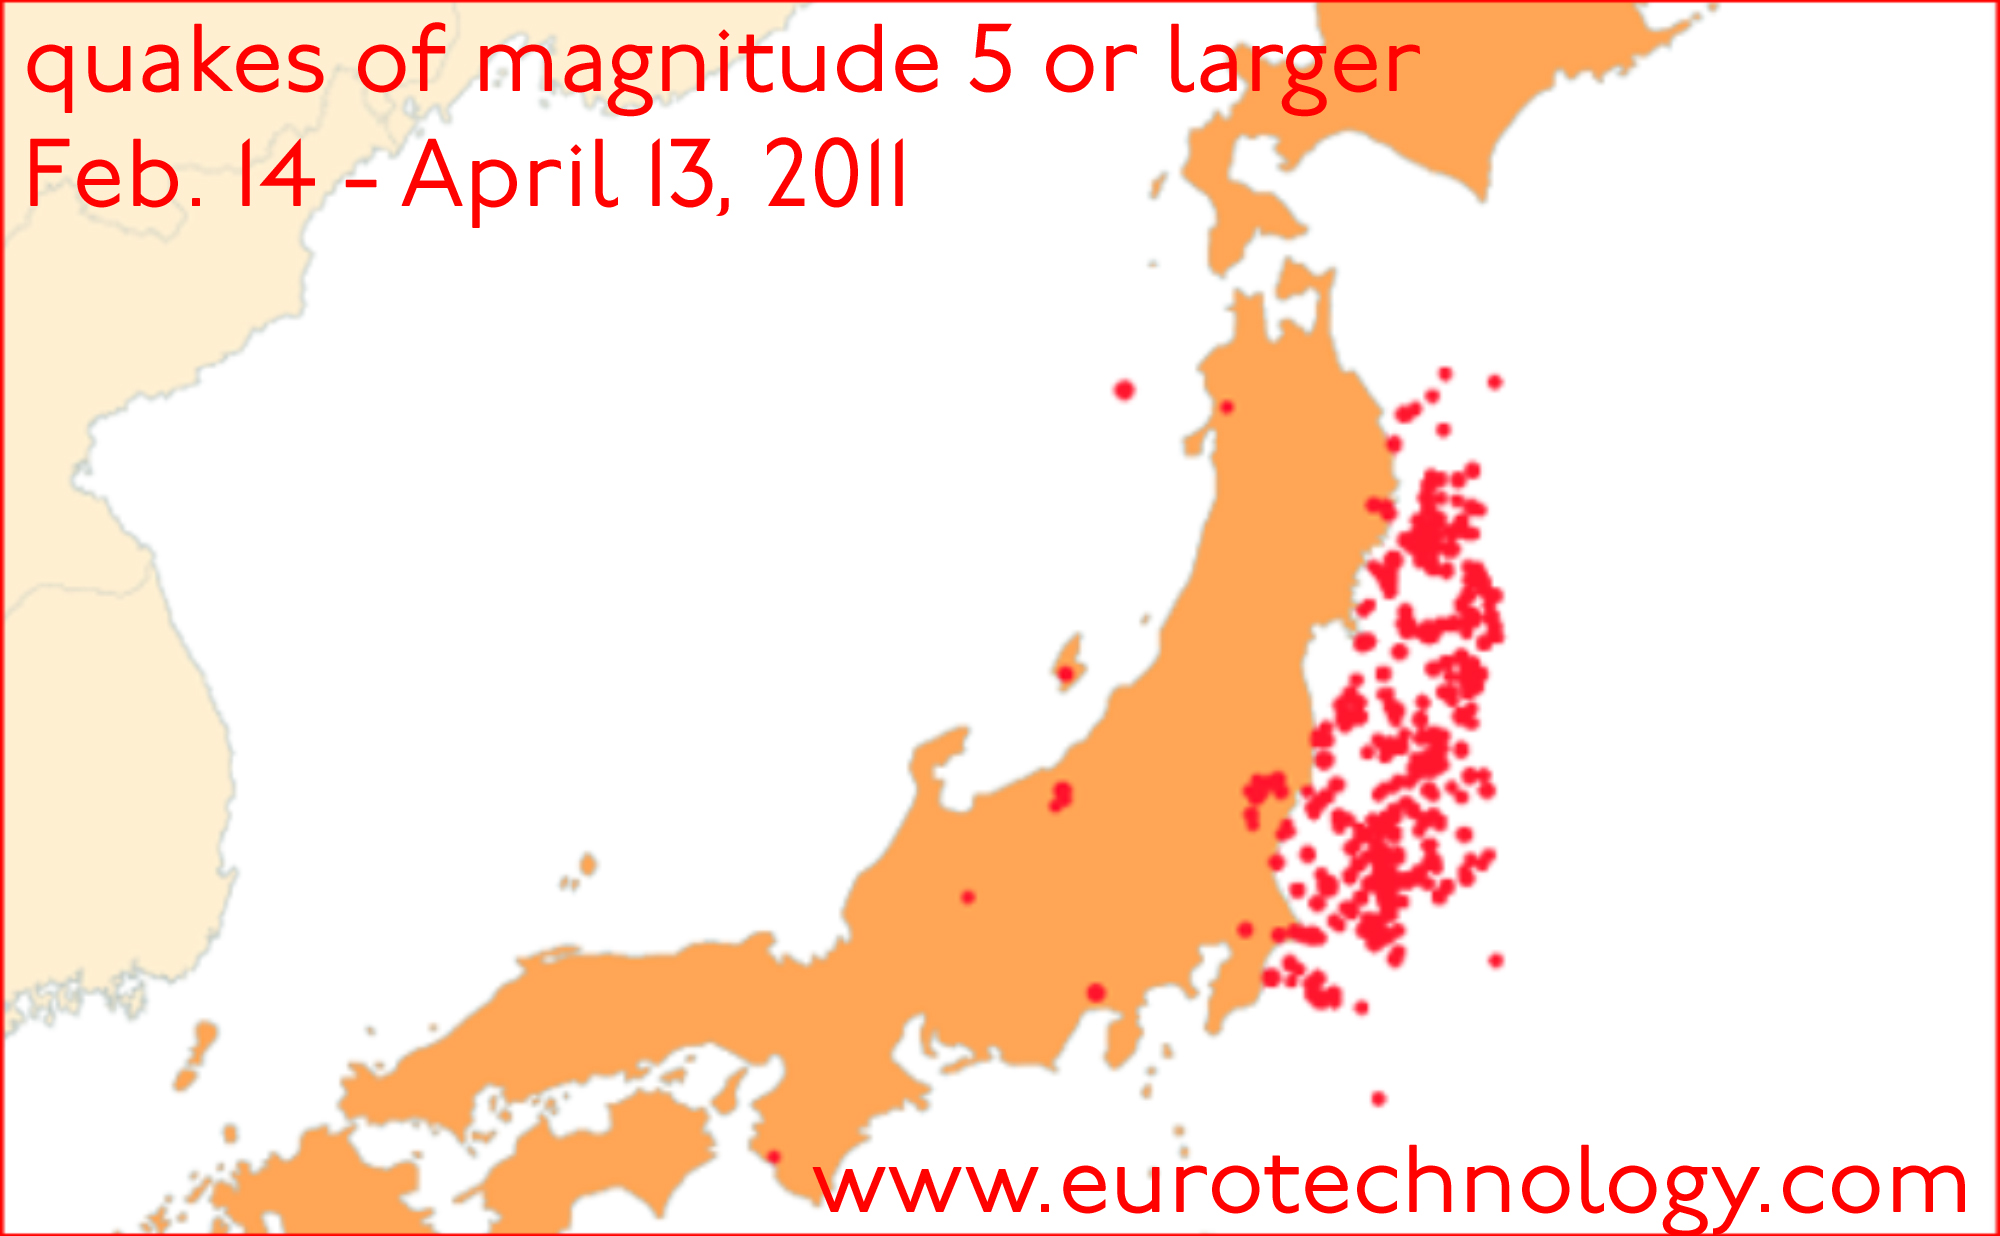 Fukushima nuclear disaster: 5 years since the Tohoku earthquake and tsunami on 2011/3/11 at 14:46:24